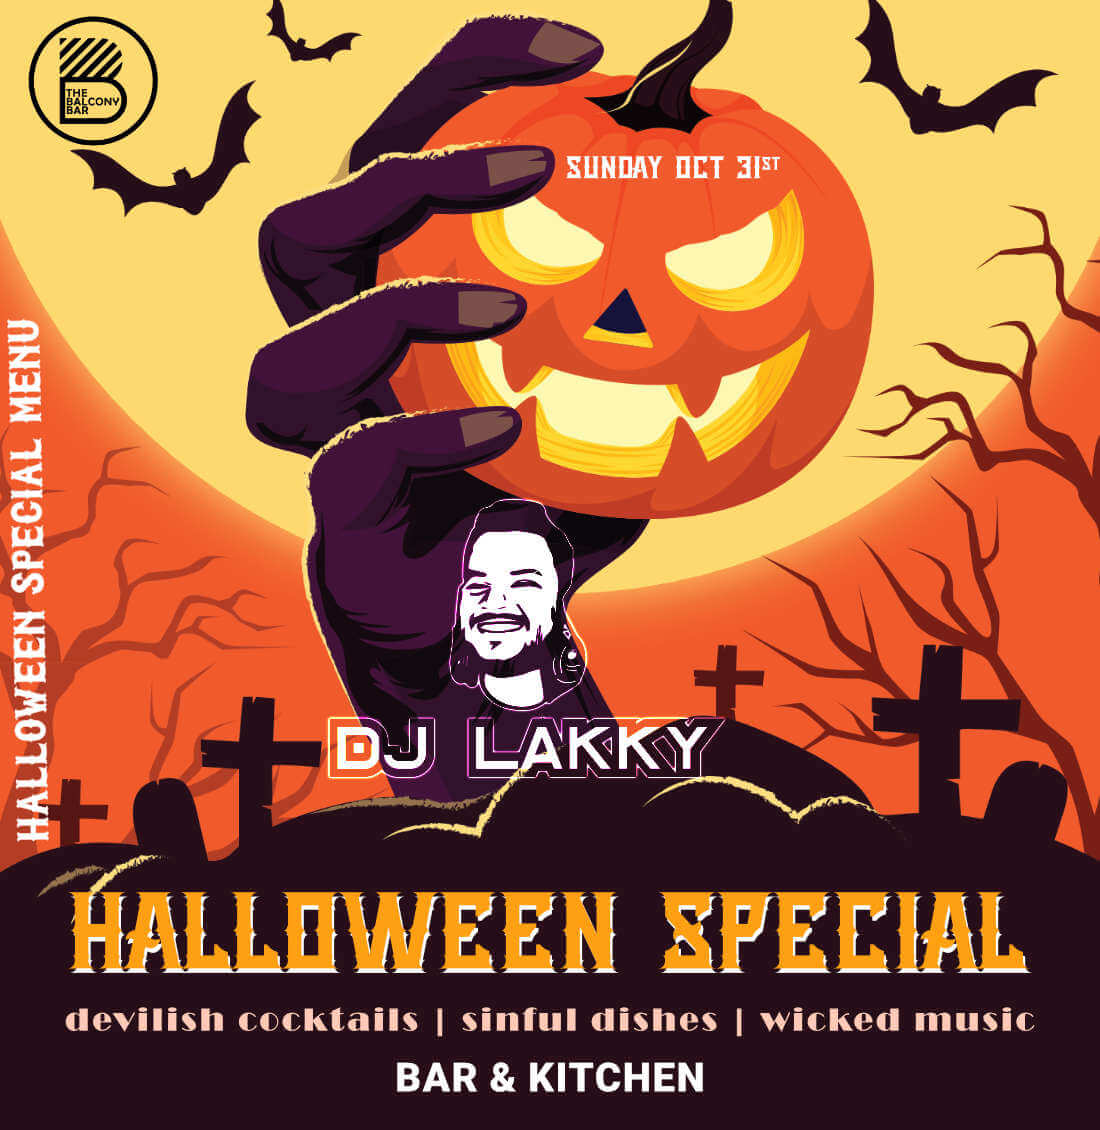 Halloween Event Poster Design for Nightclub